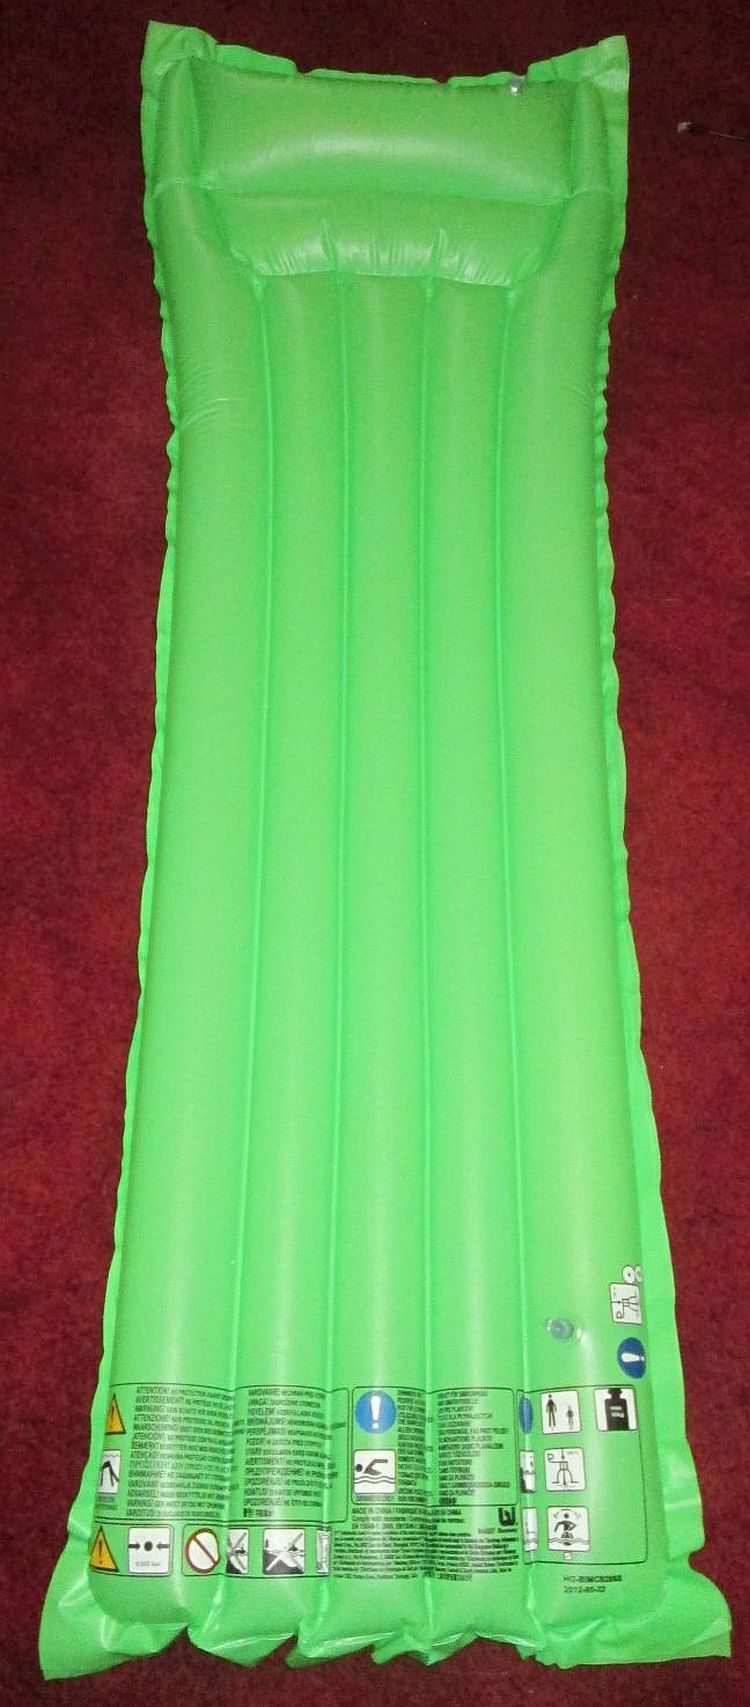 an ordinary, simple green plastic lilo